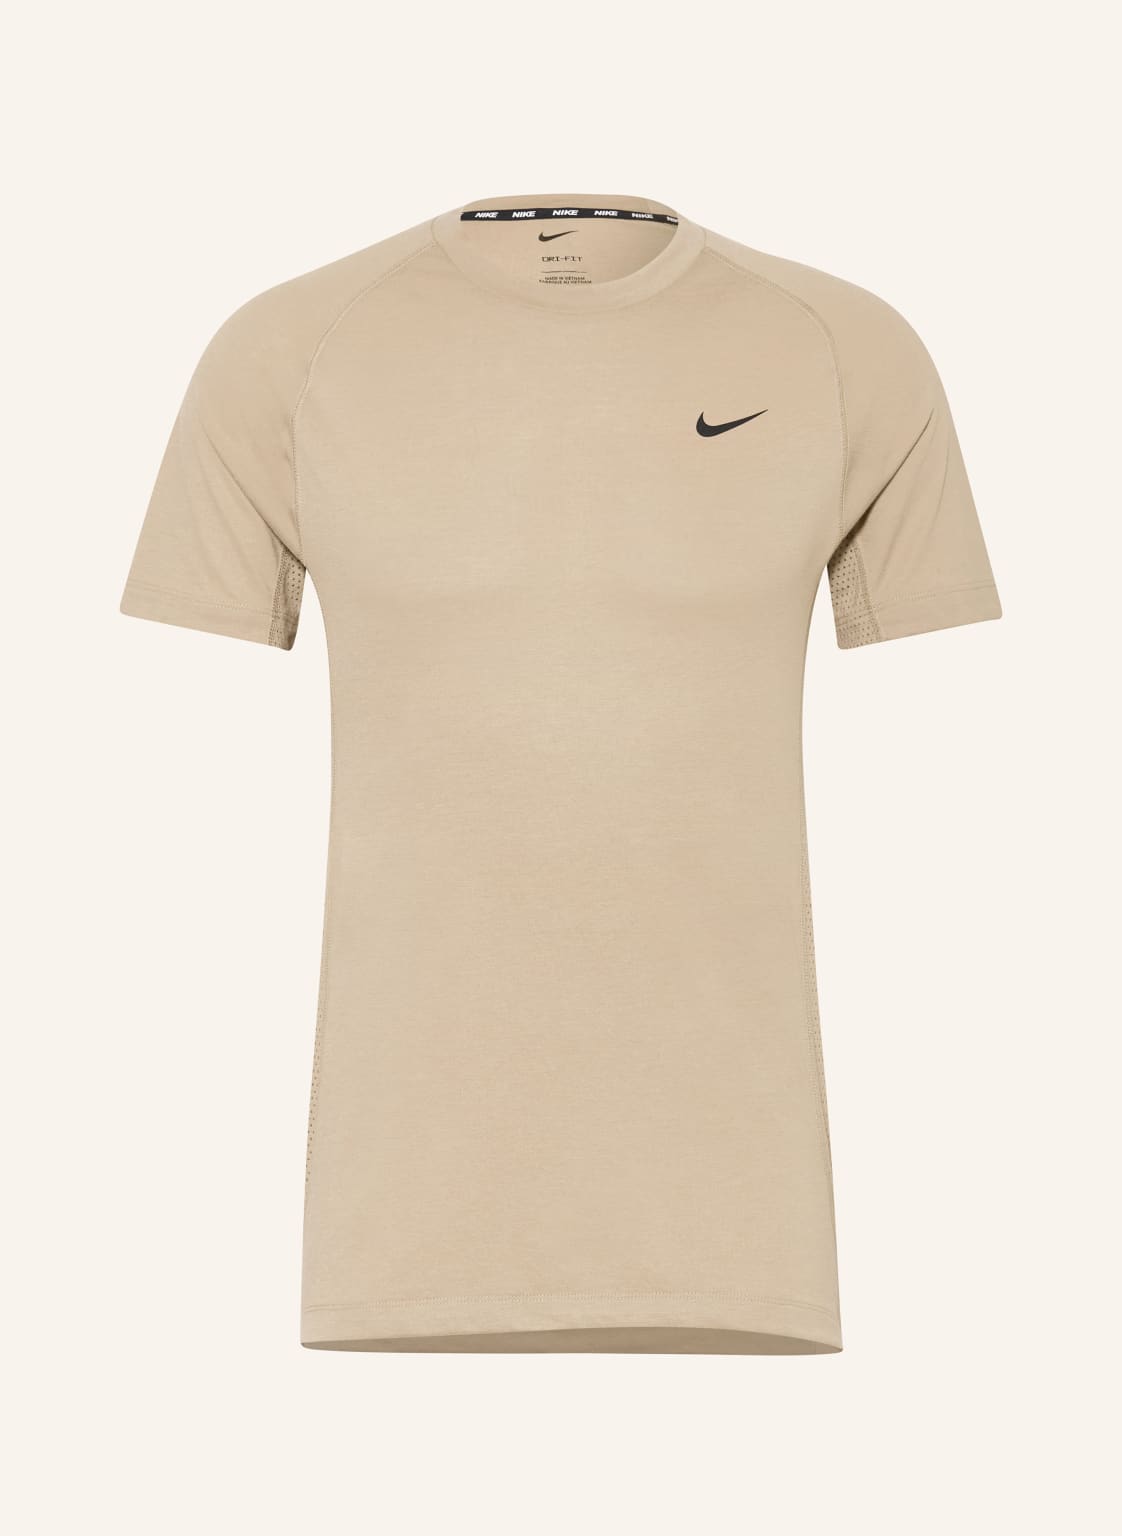 Nike T-Shirt Flex Rep Dri-Fit braun von Nike